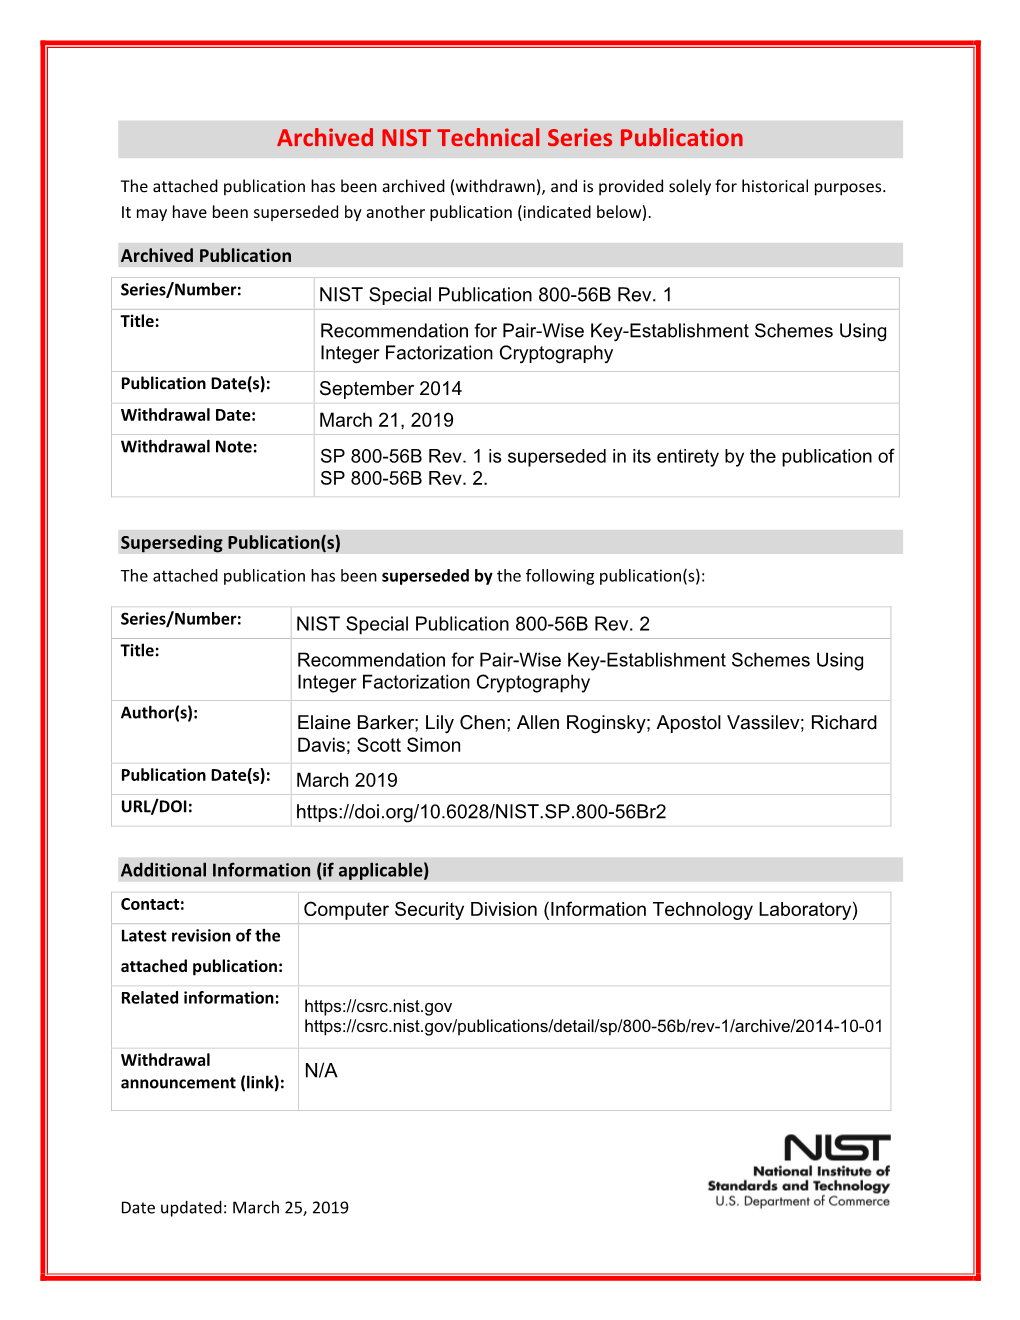 NIST SP 800-56B Rev. 1